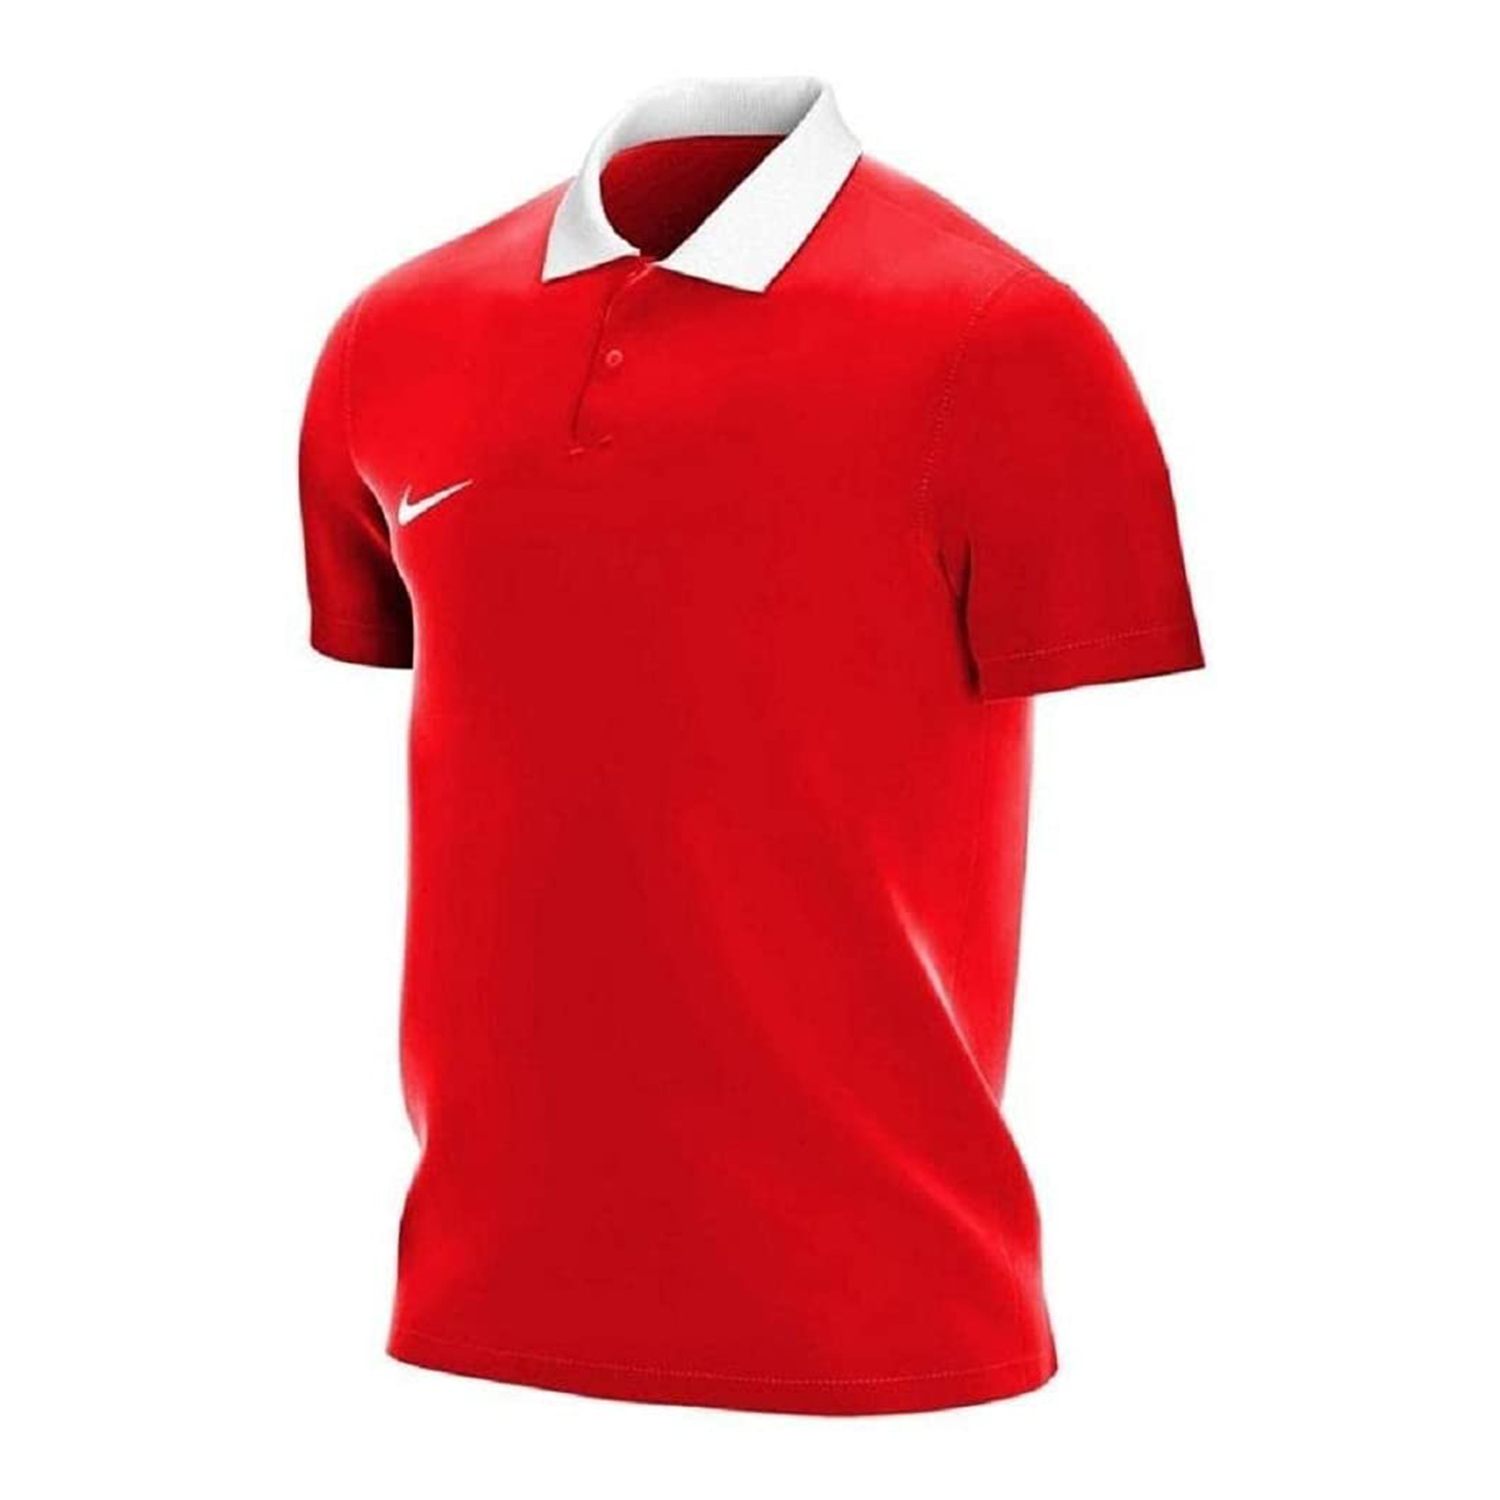 Nike Herren Poloshirt TEAM CLUB 20 Dri-FIT rot/weiss CW6933 657